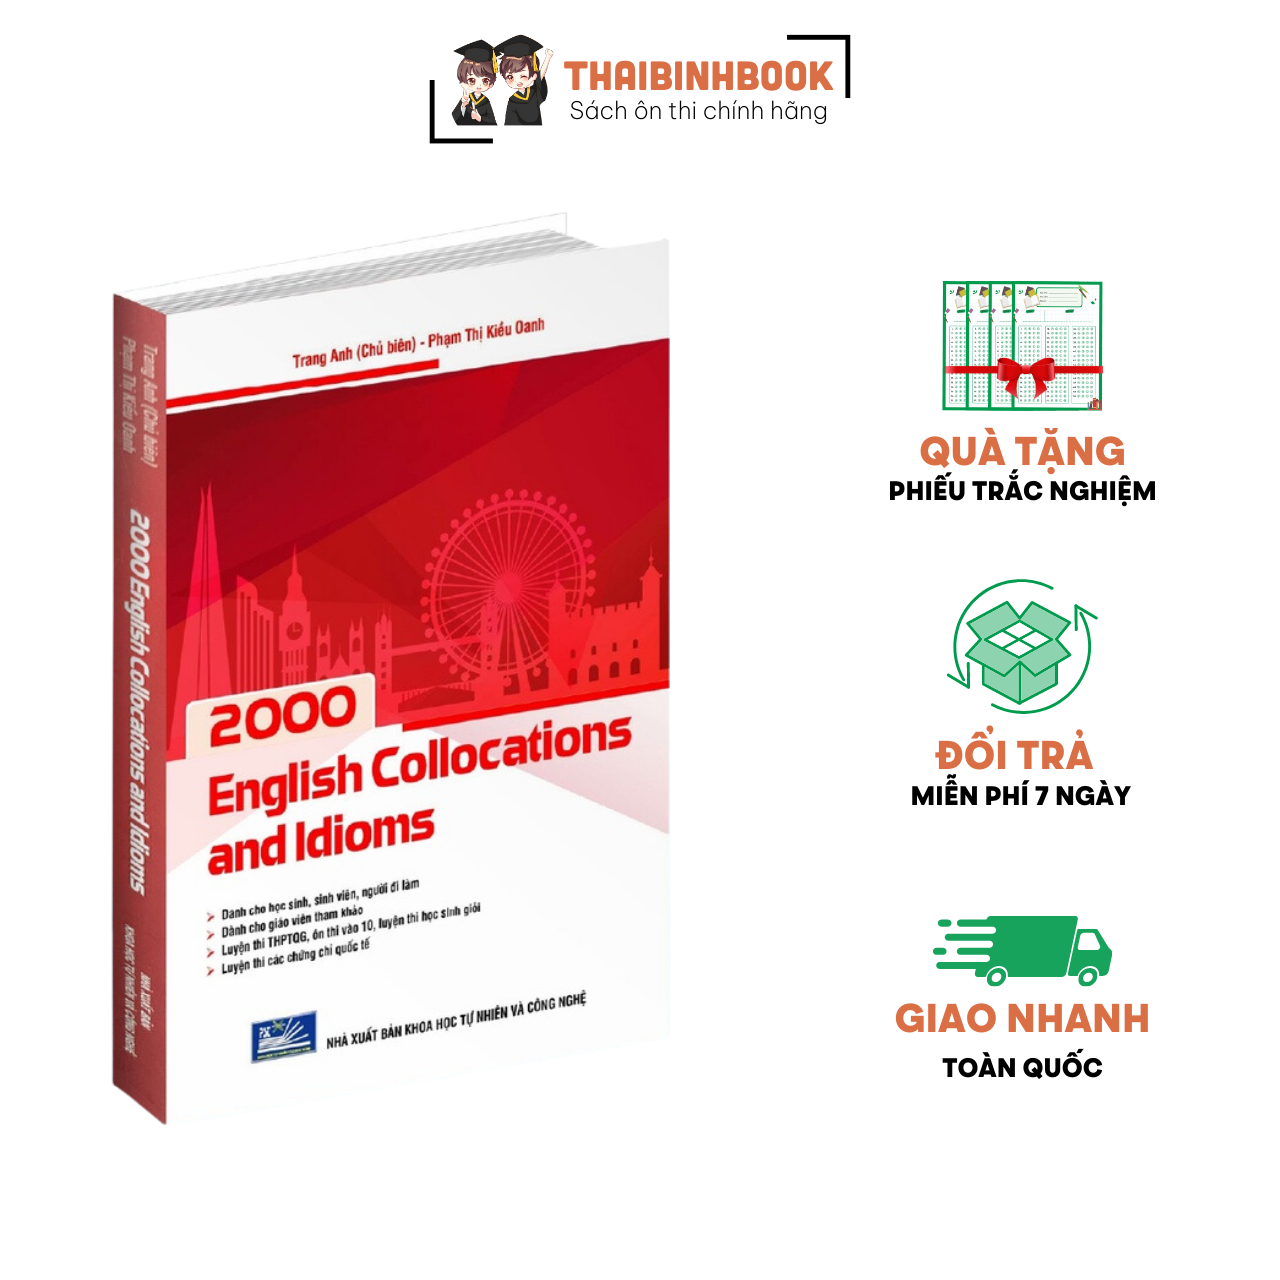 Sách Tiếng Anh cô Trang Anh : 2000 English Collocation and Idioms